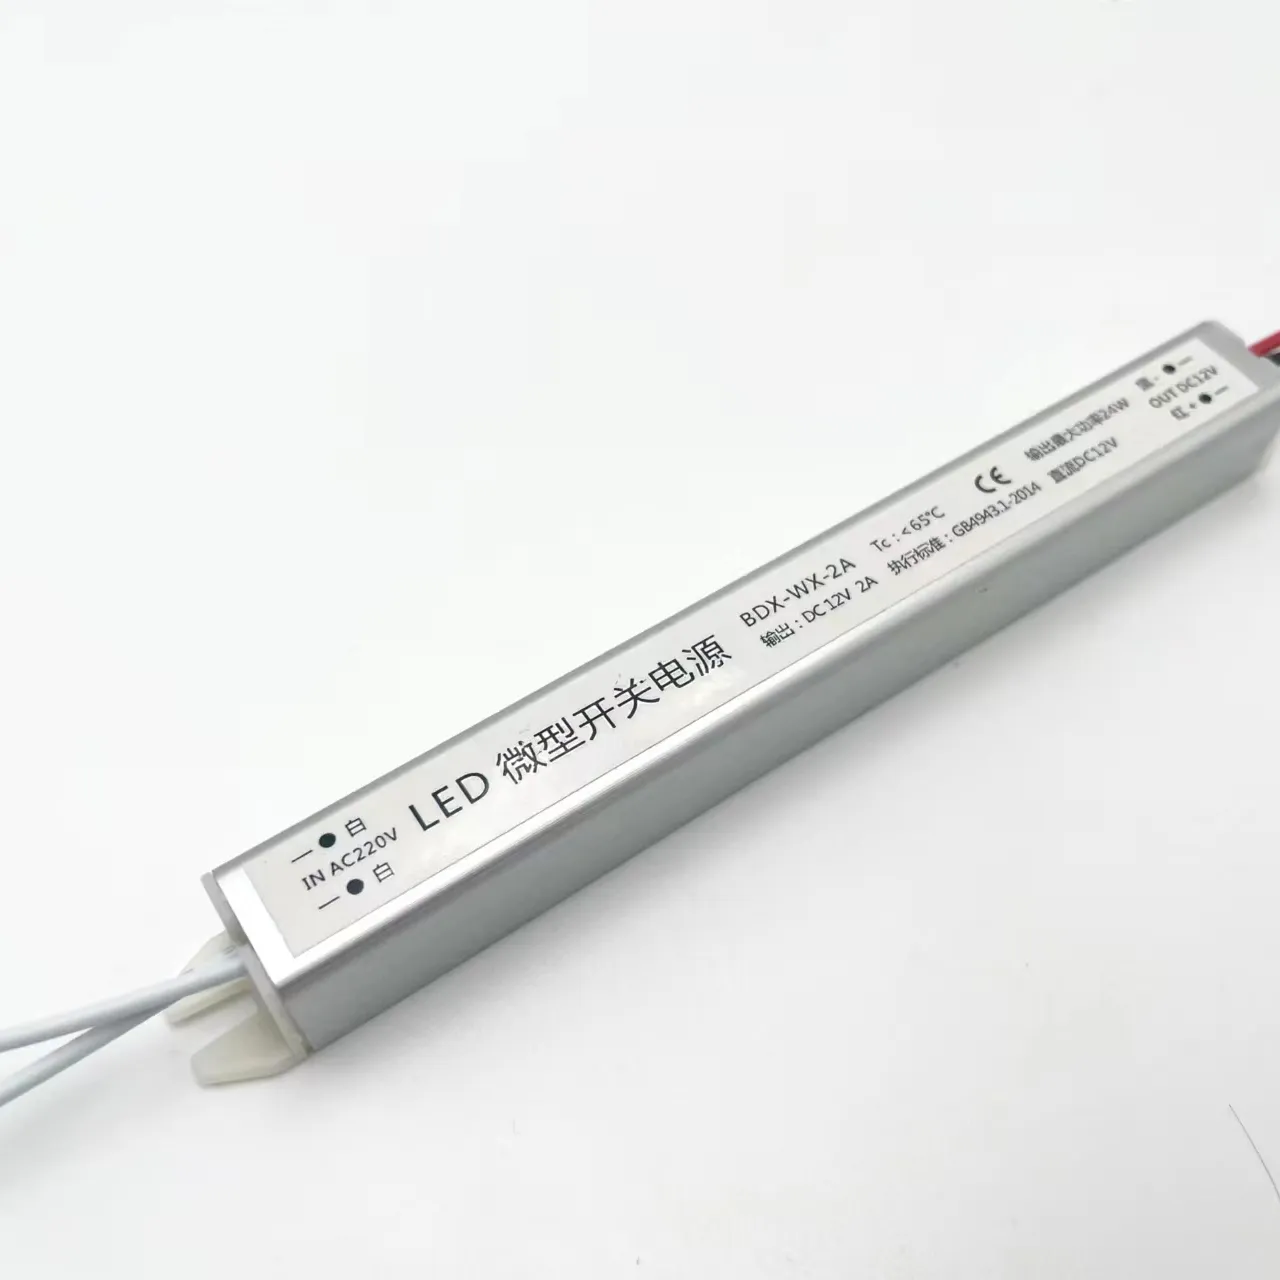 Fuente de alimentación LED de alta calidad de 12V 15W con carcasa delgada, voltaje constante de CA a CC, controlador ignífugo, iluminación LED certificada CE